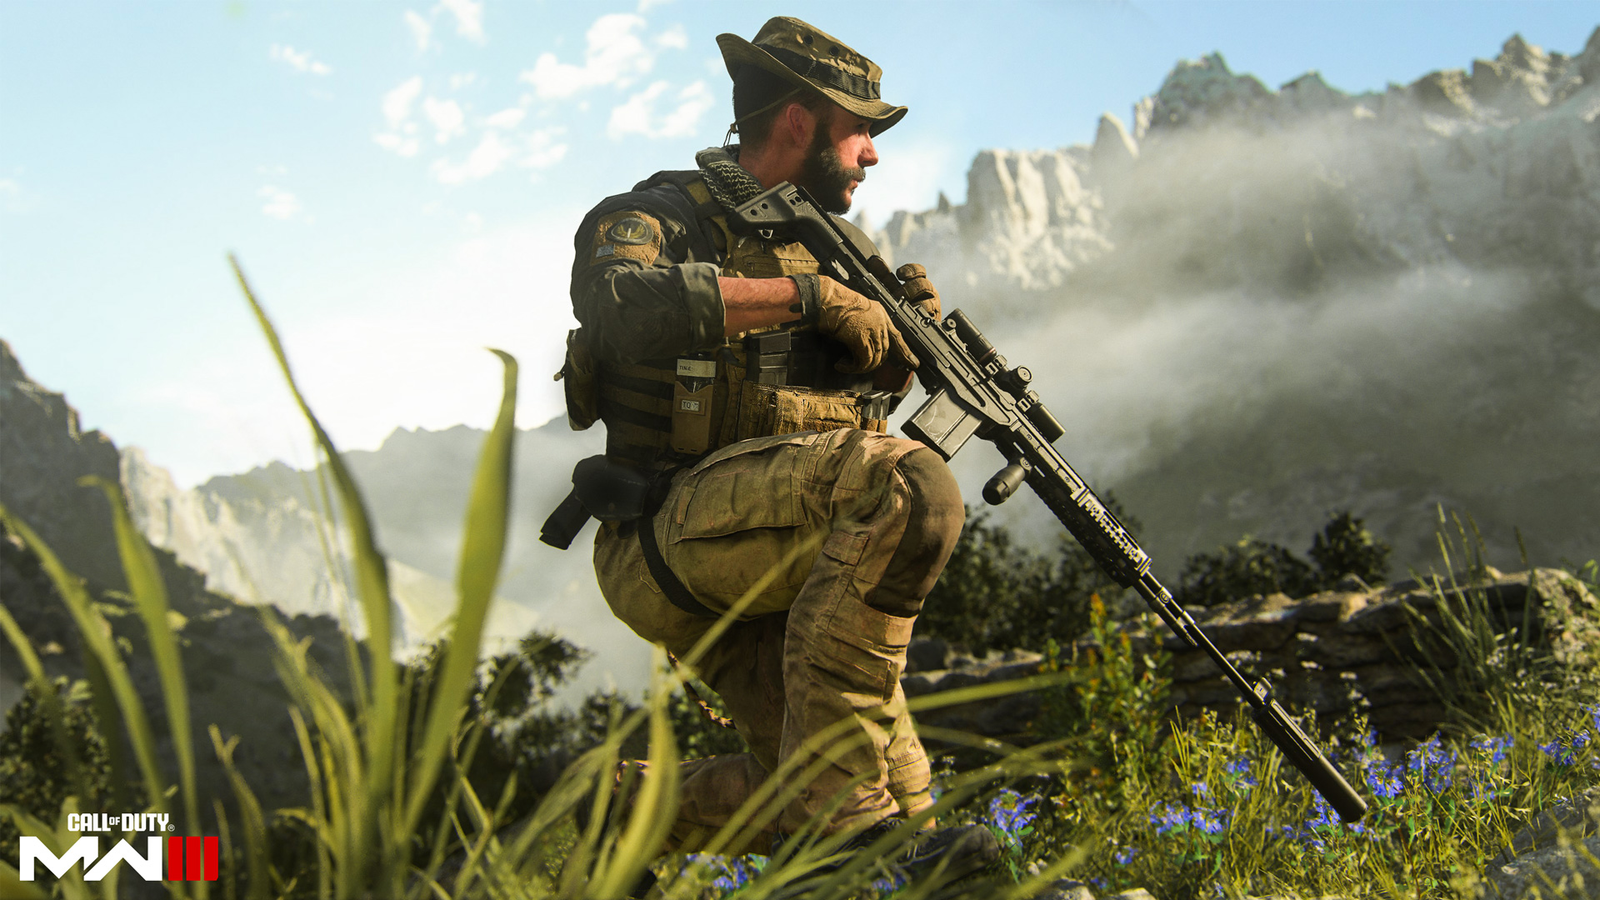 Call of Duty MW3 Multiplayer Maps: All Modern Warfare 3 Maps